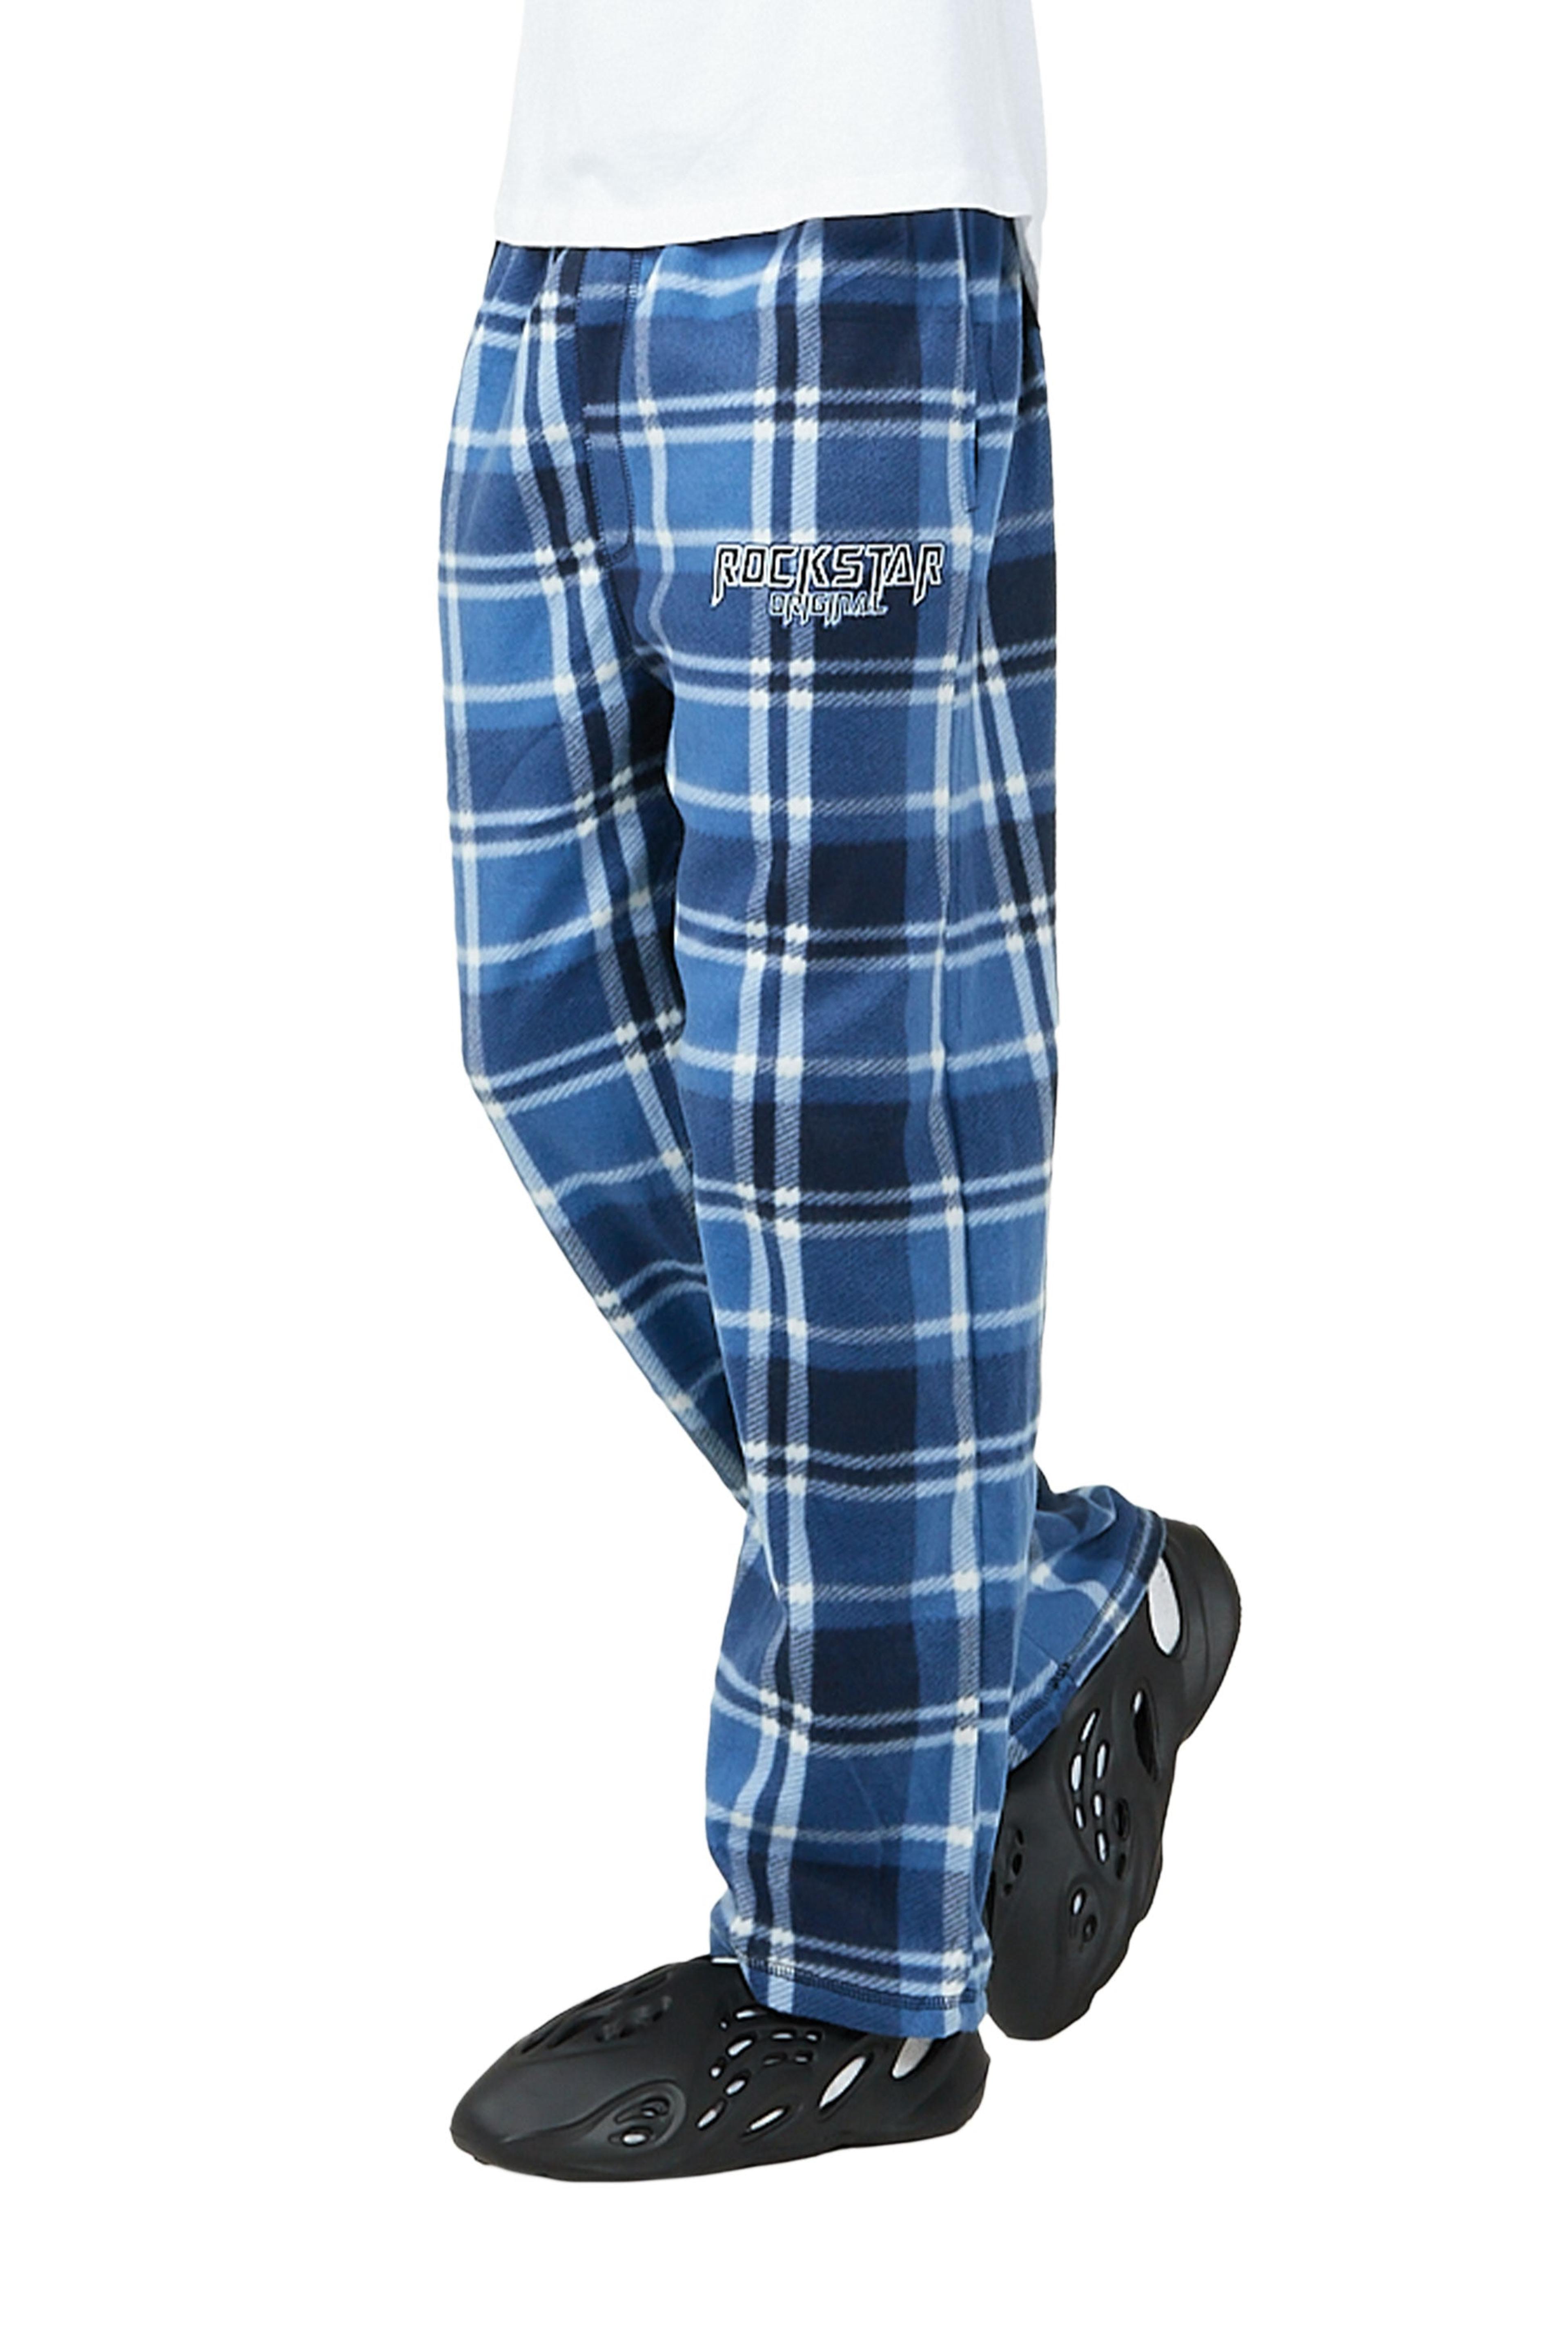 NTWRK - Nigel Blue Plaid Pajamas